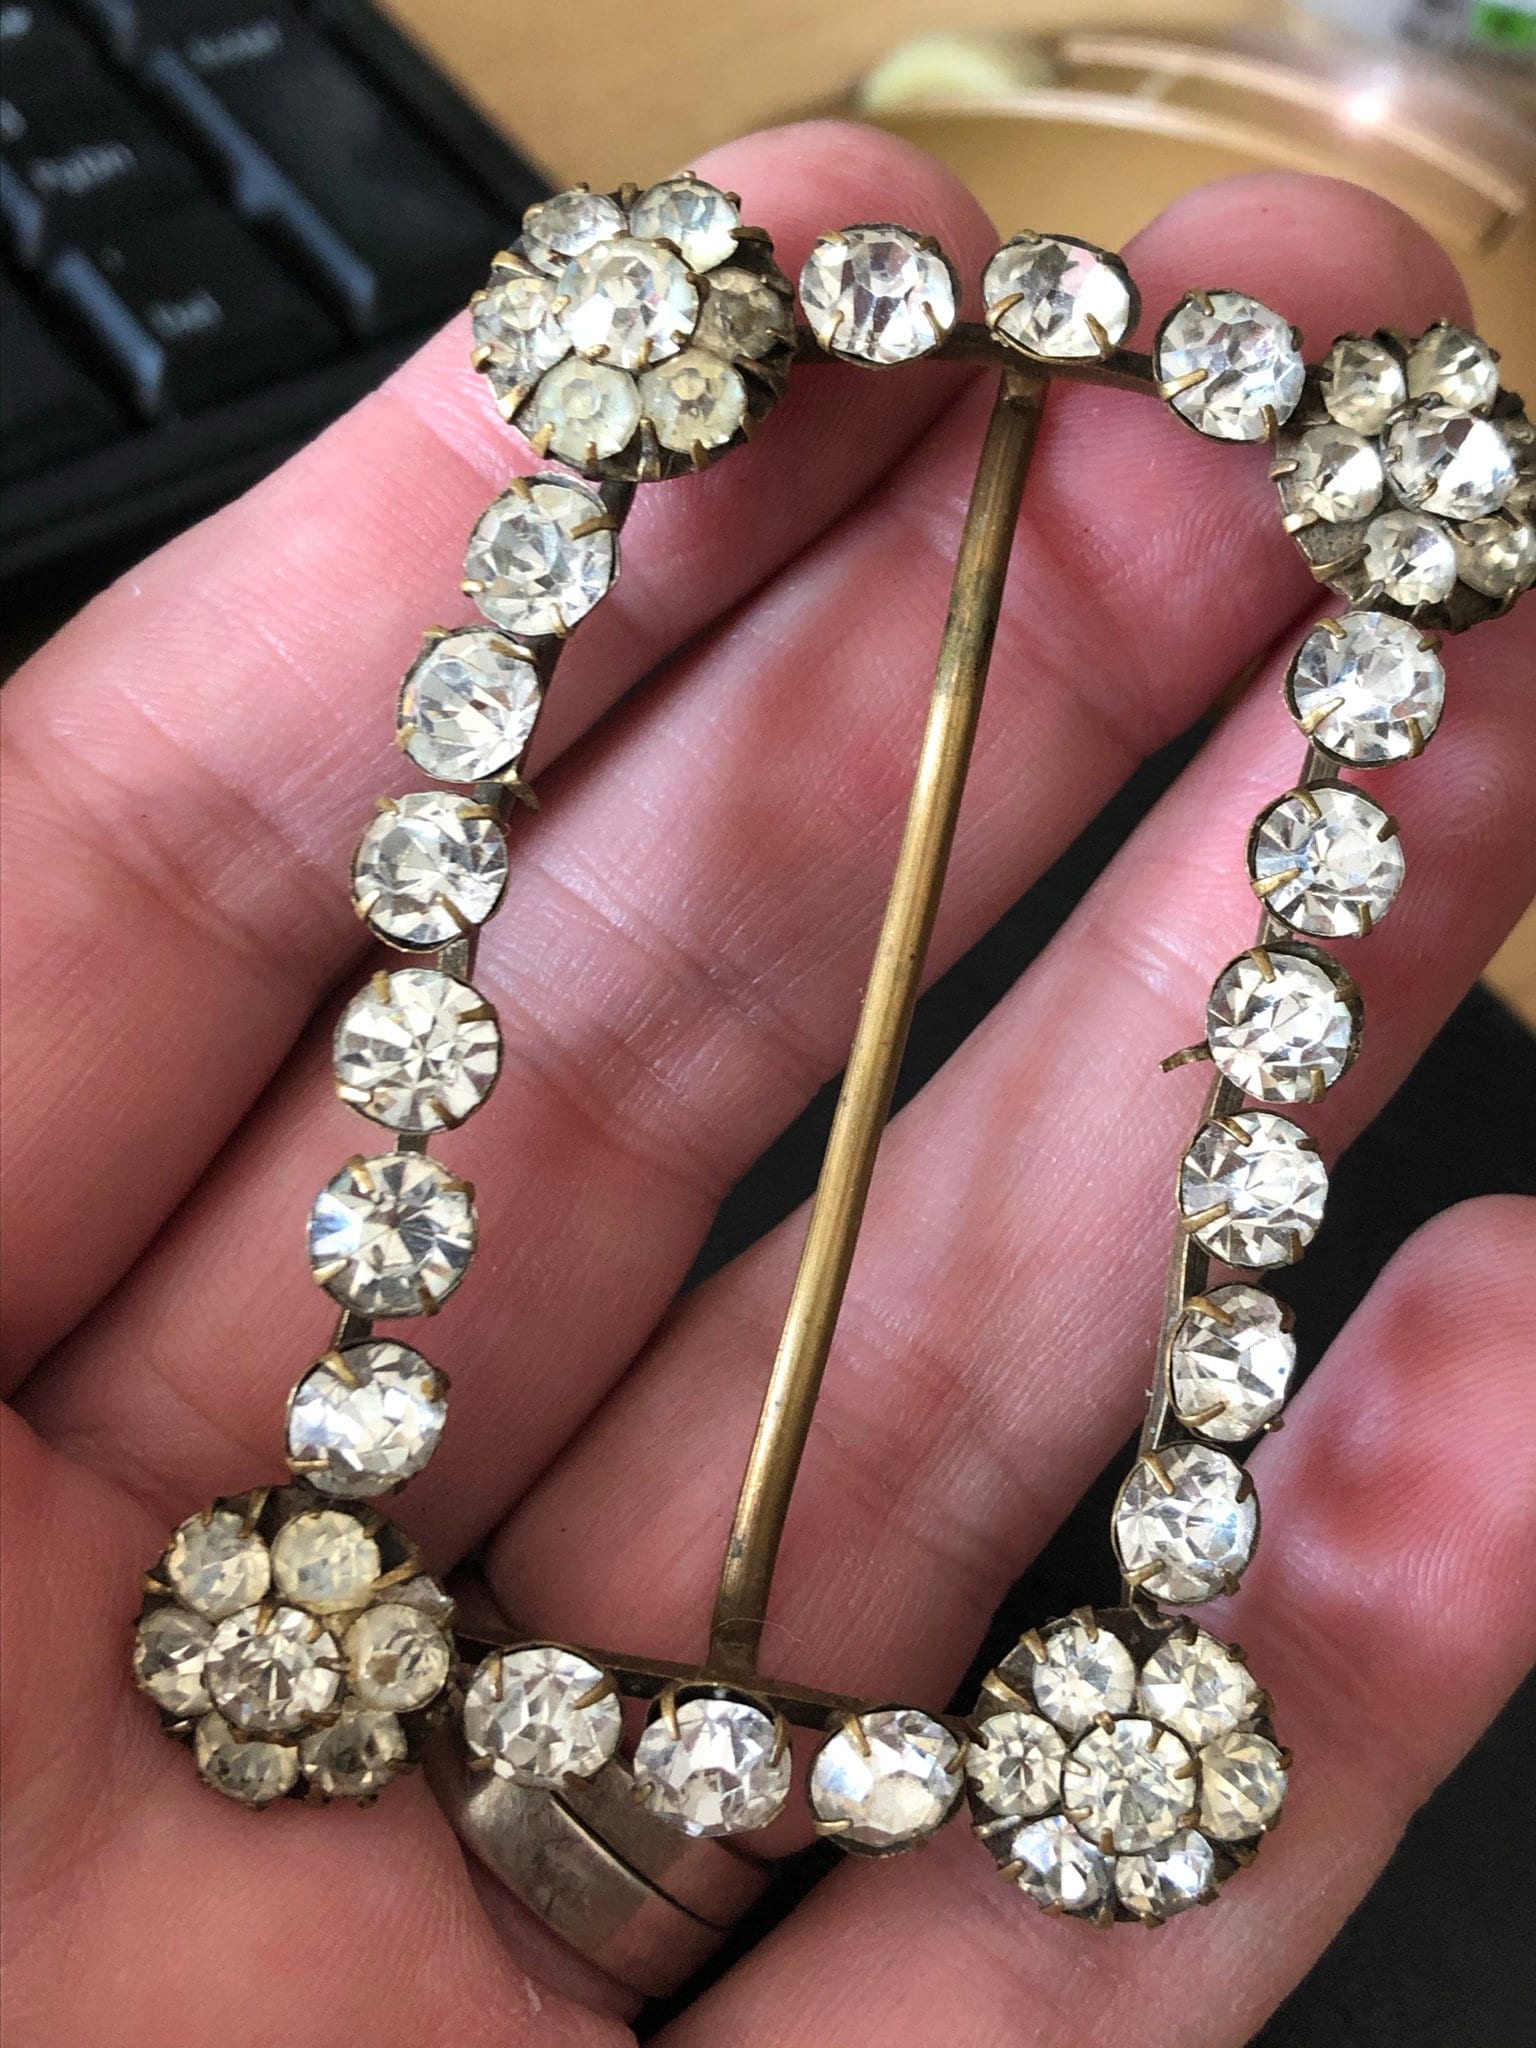 misshapen 6cm vintage antique rectangular Claw Set Clear Glass Diamante Belt Buckle paste rhinestone Bridal Wedding Sash Adornment Fitting